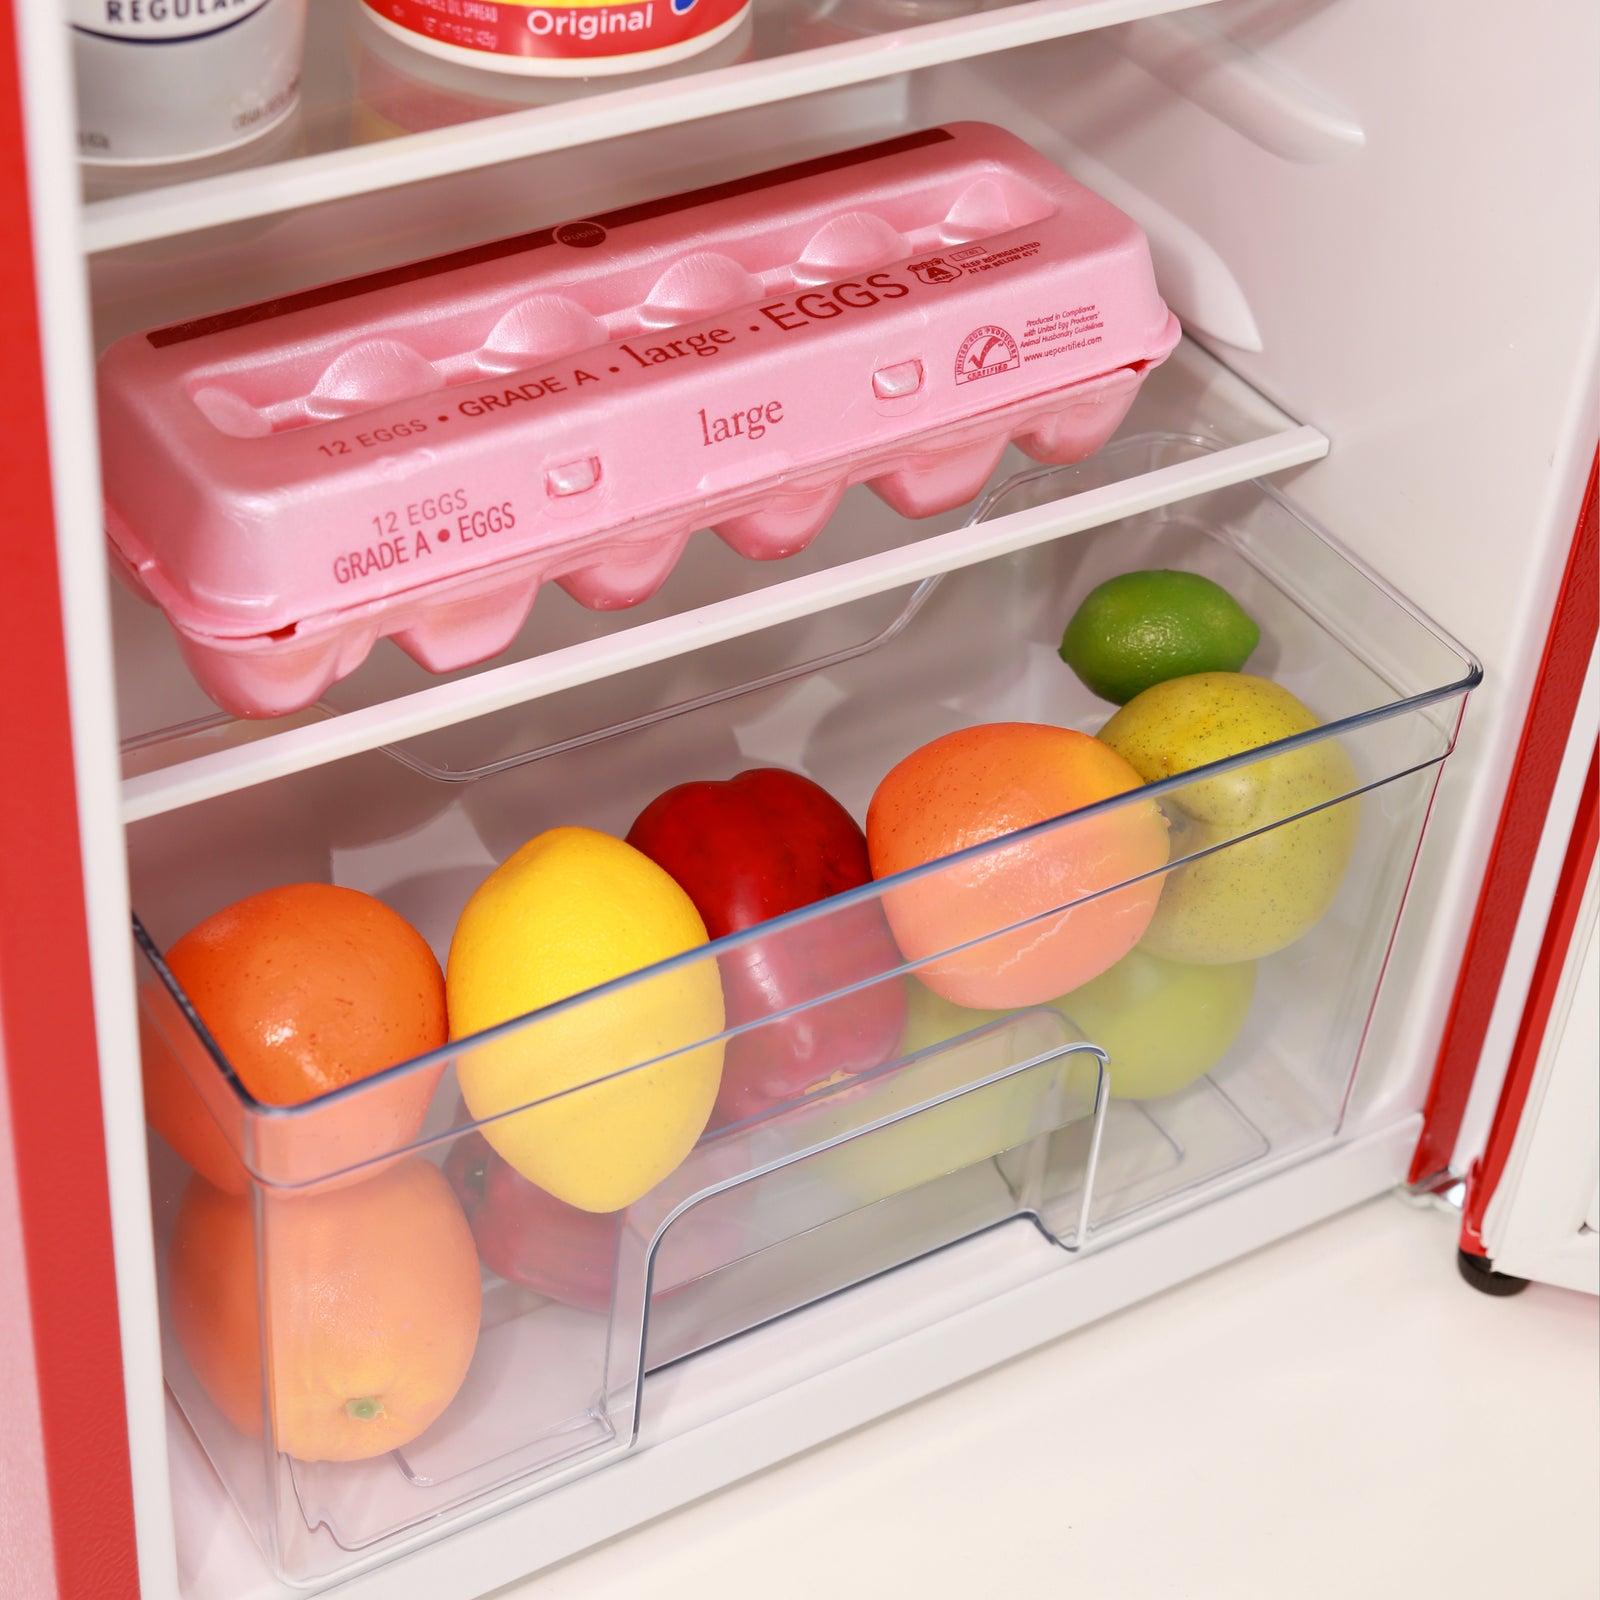 Avanti Retro Series Compact Refrigerator, Mini-Fridge, 3.1 cu. ft., in Red  (RMRS31X5R-IS)